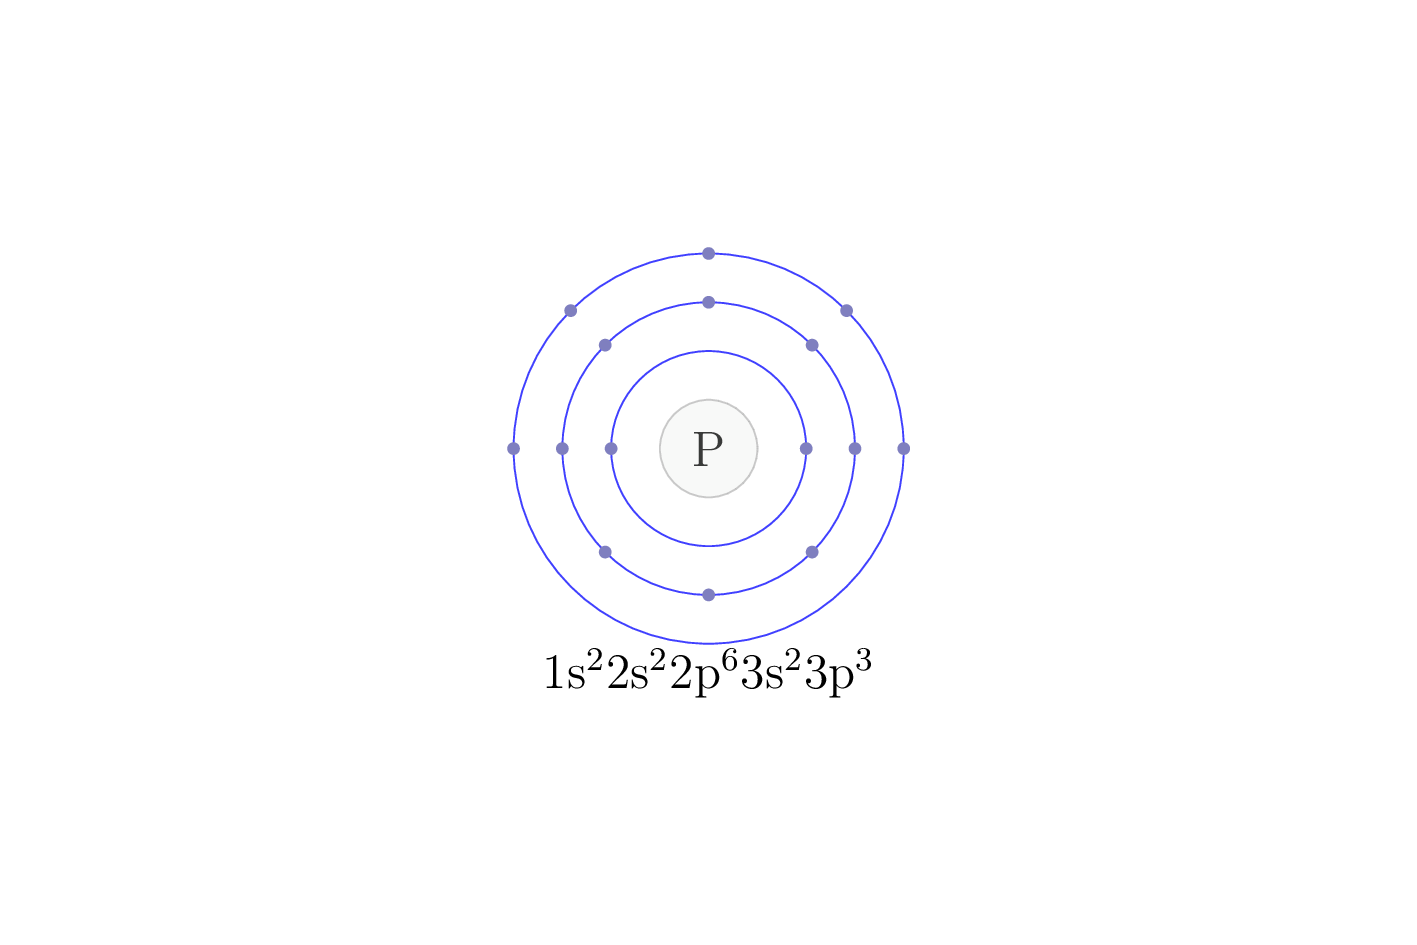 electron configuration of element P